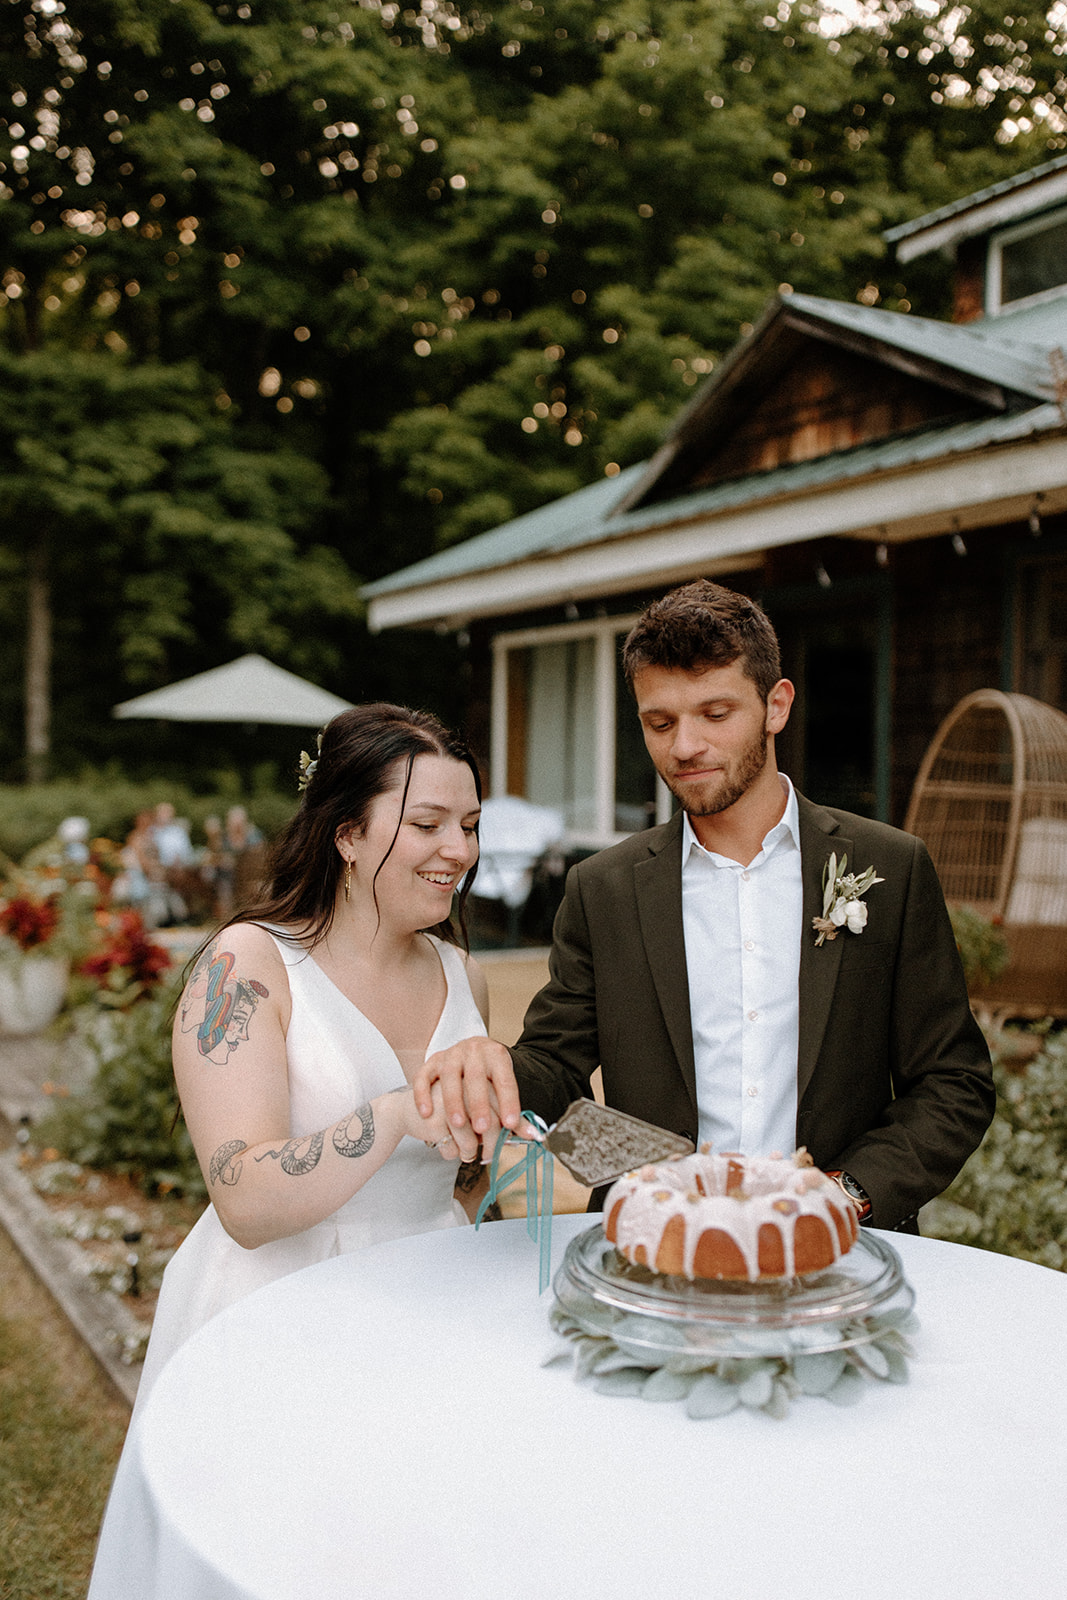 cake cutting photos for backyard wedding in traverse city michigan